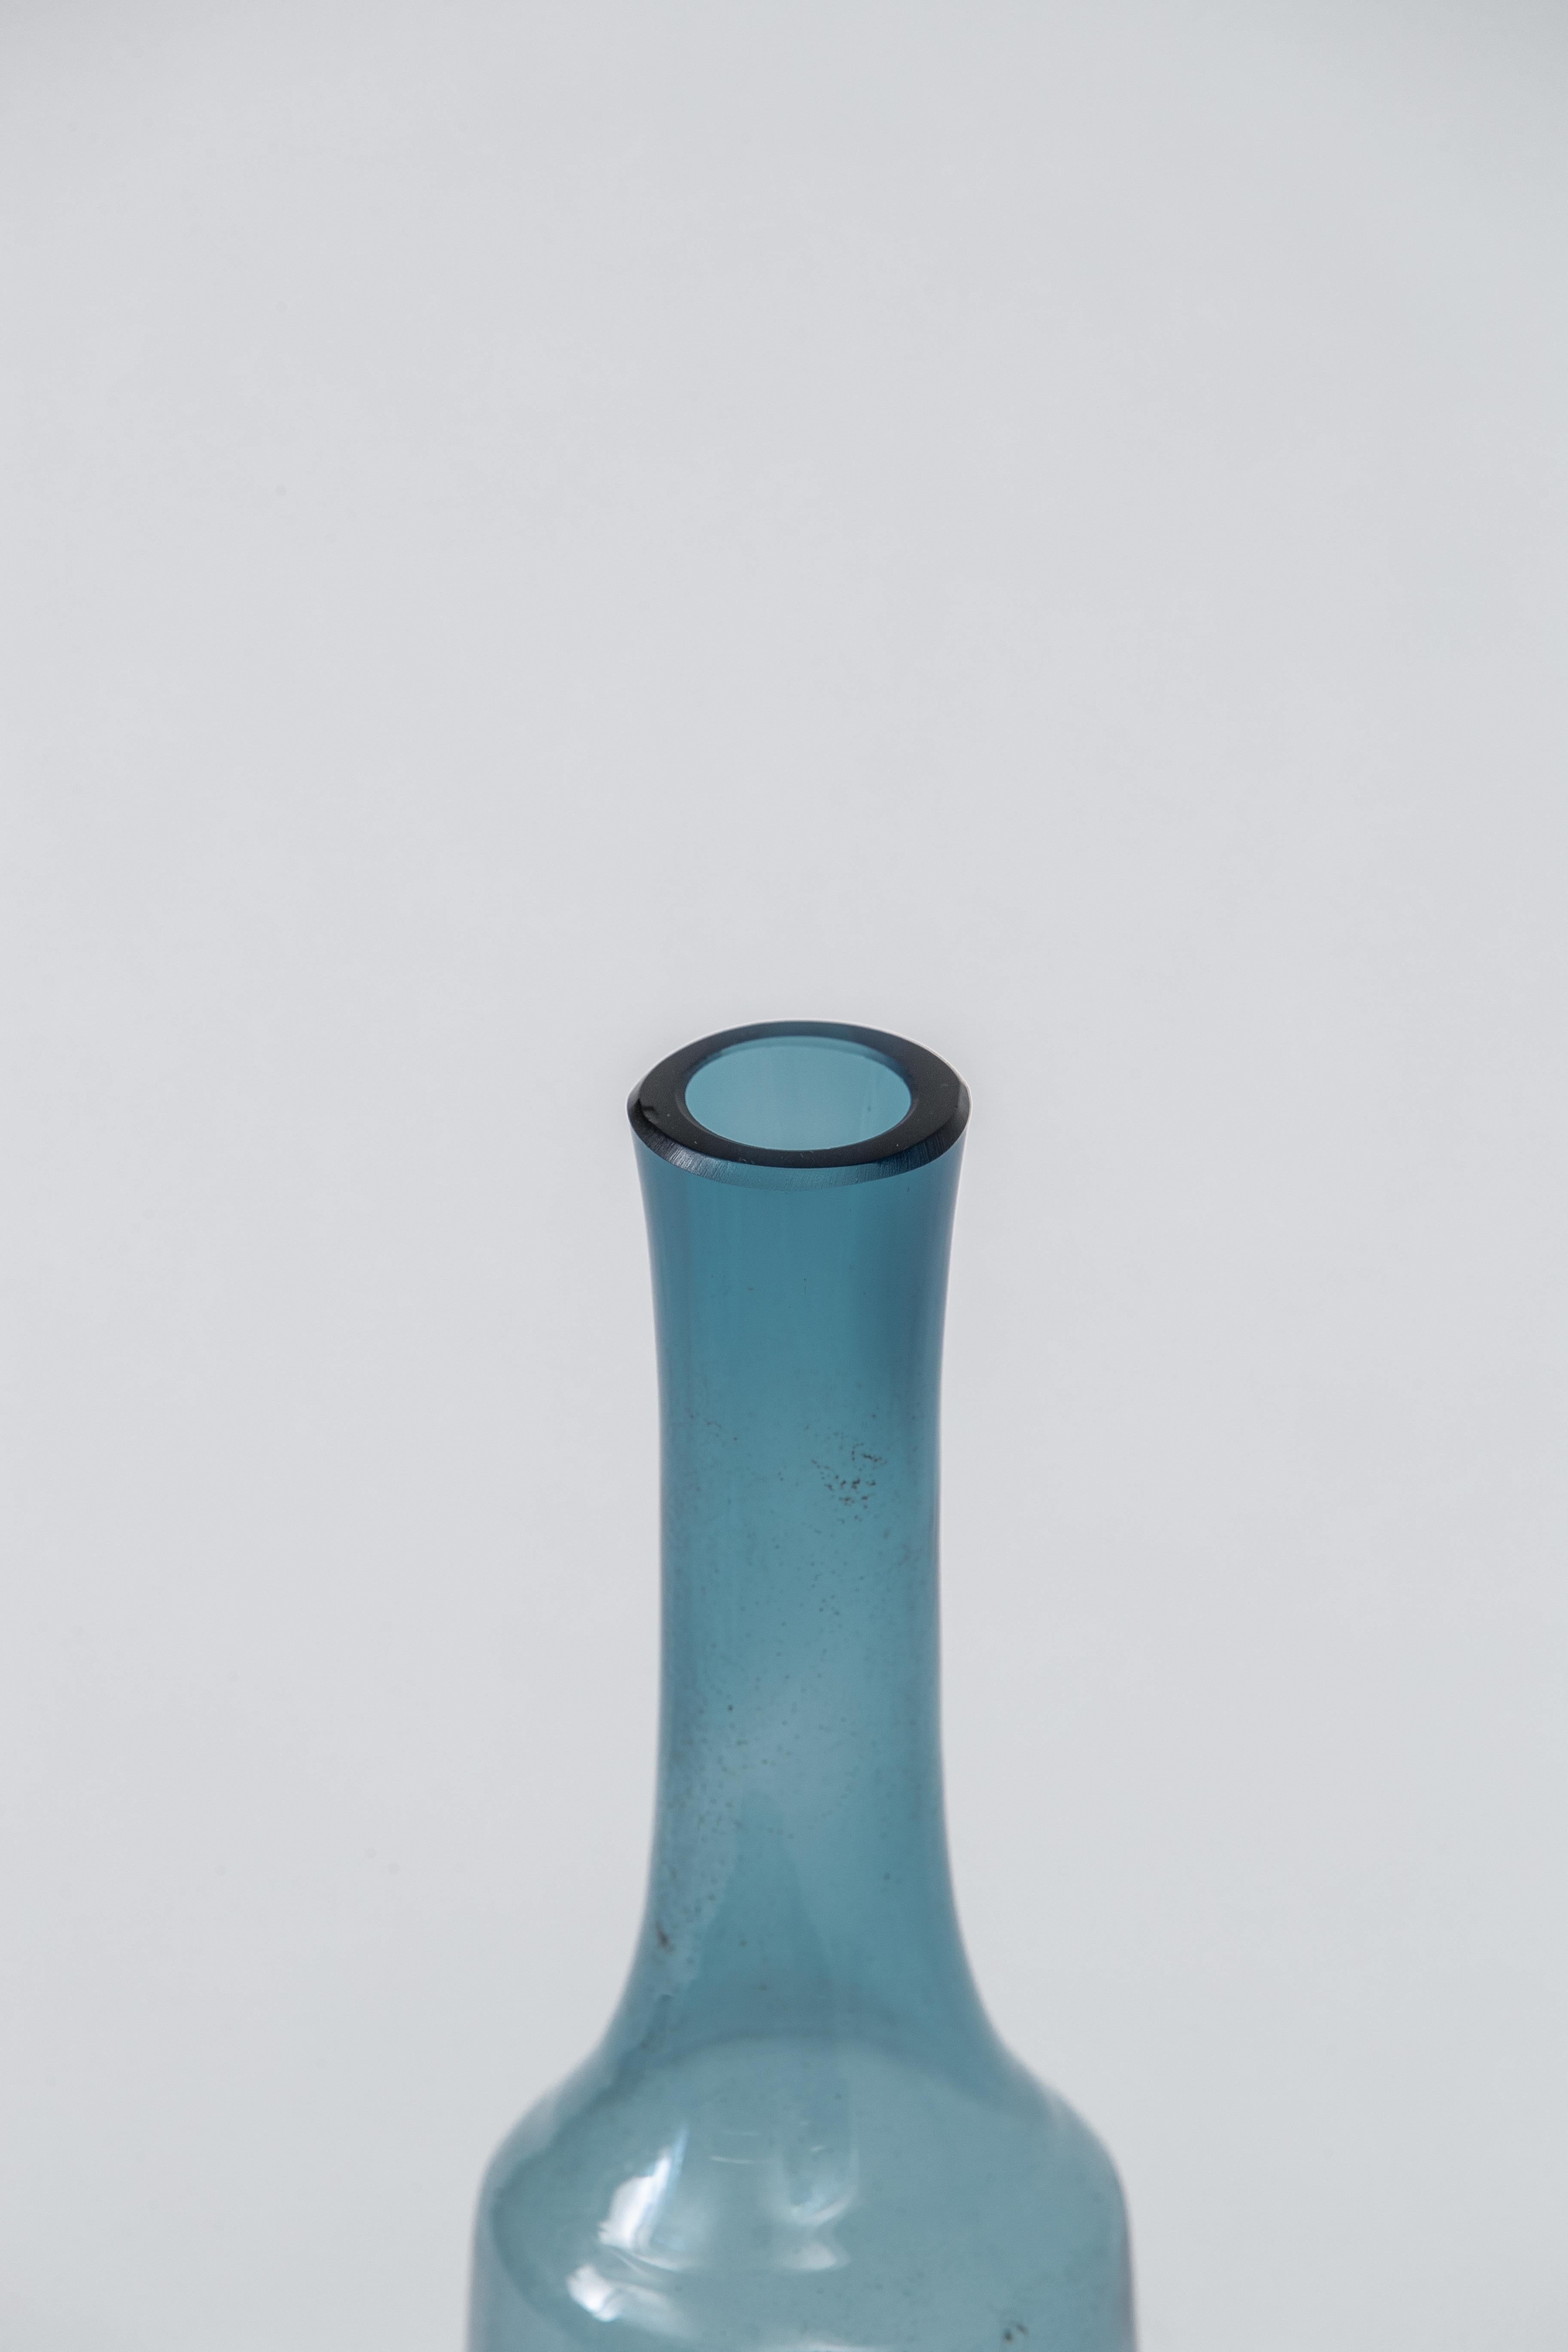 Mid-20th Century Blue Holmegaard Bottle Vessel, Denmark 1960's